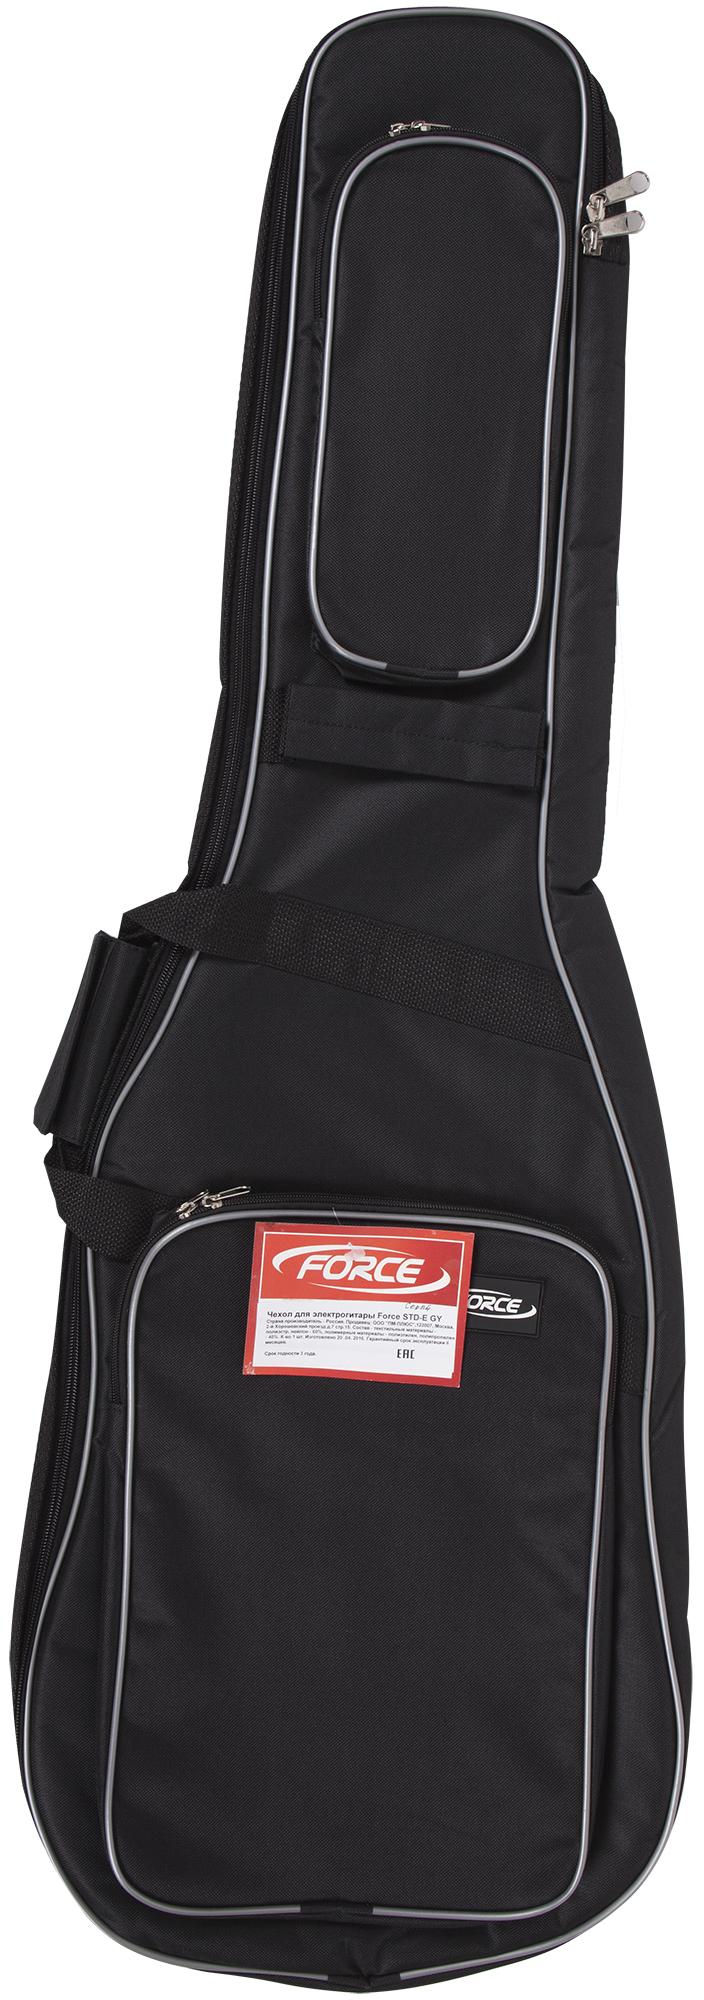 FORCE STD-E GY - Чехол для электрогитары,цвет черный с серым кантом.